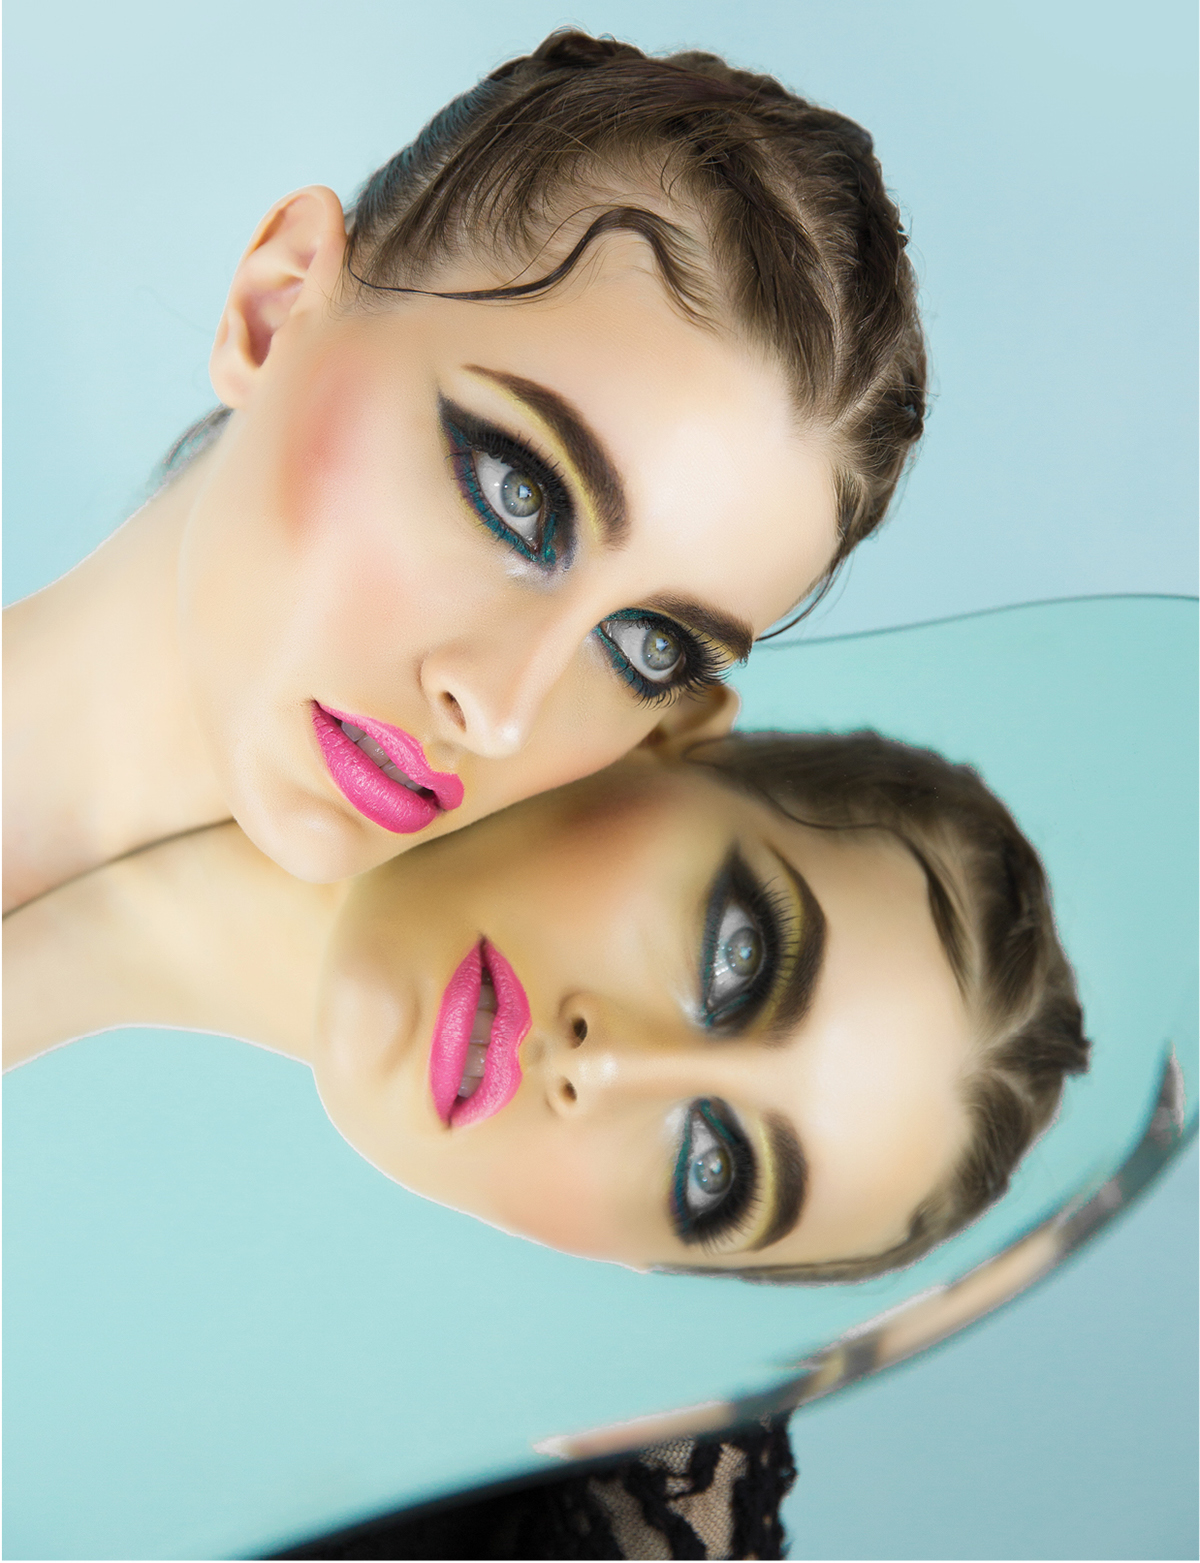 7huesmag 7hues magazine publication published work beauty makeup editorial